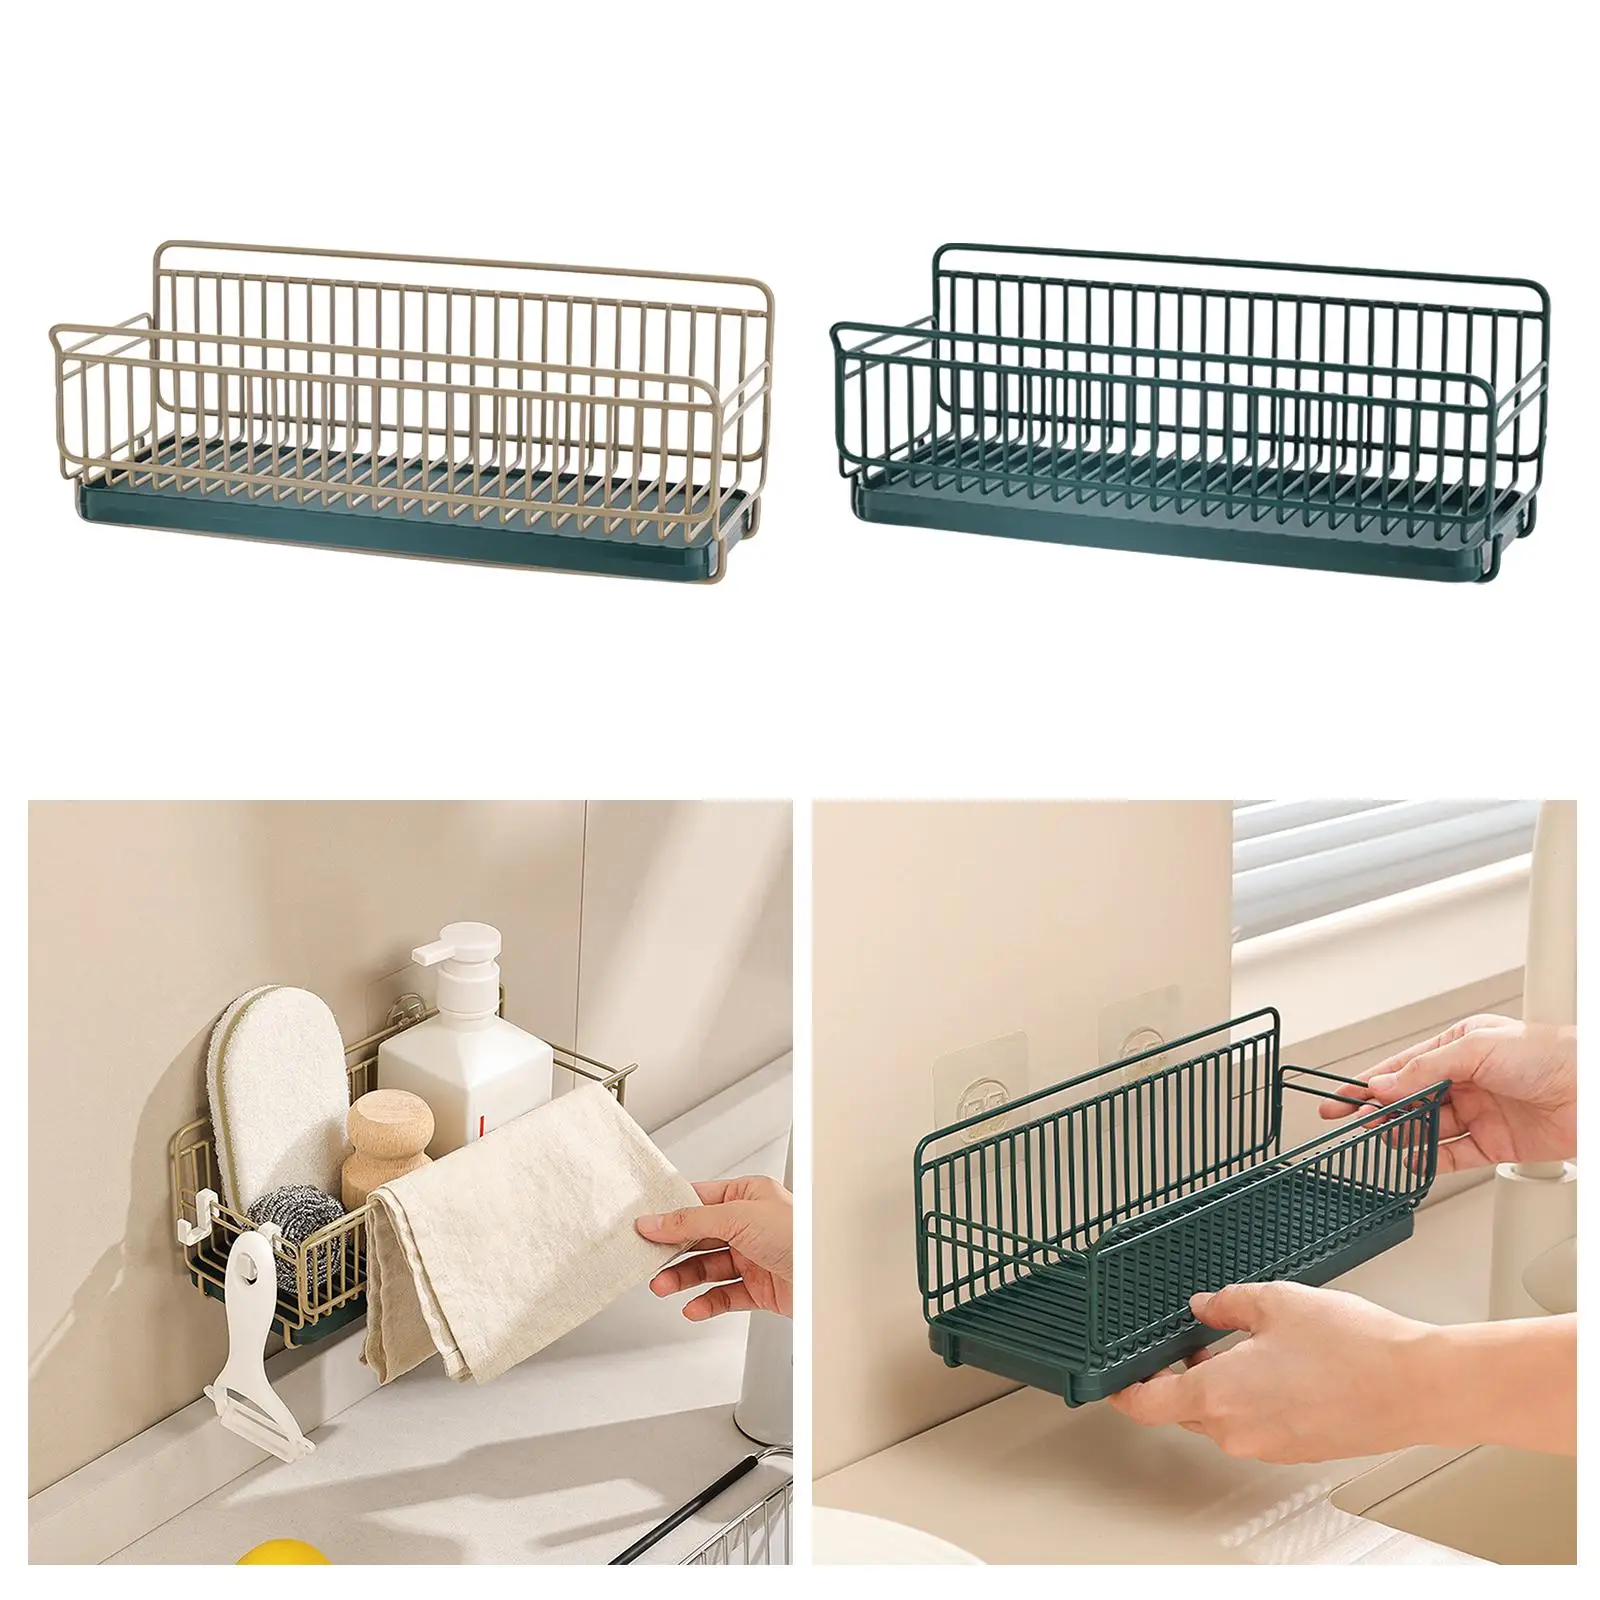 Sink shelf, dish drainer, dishcloth holder, with drain tray, organizer mounted